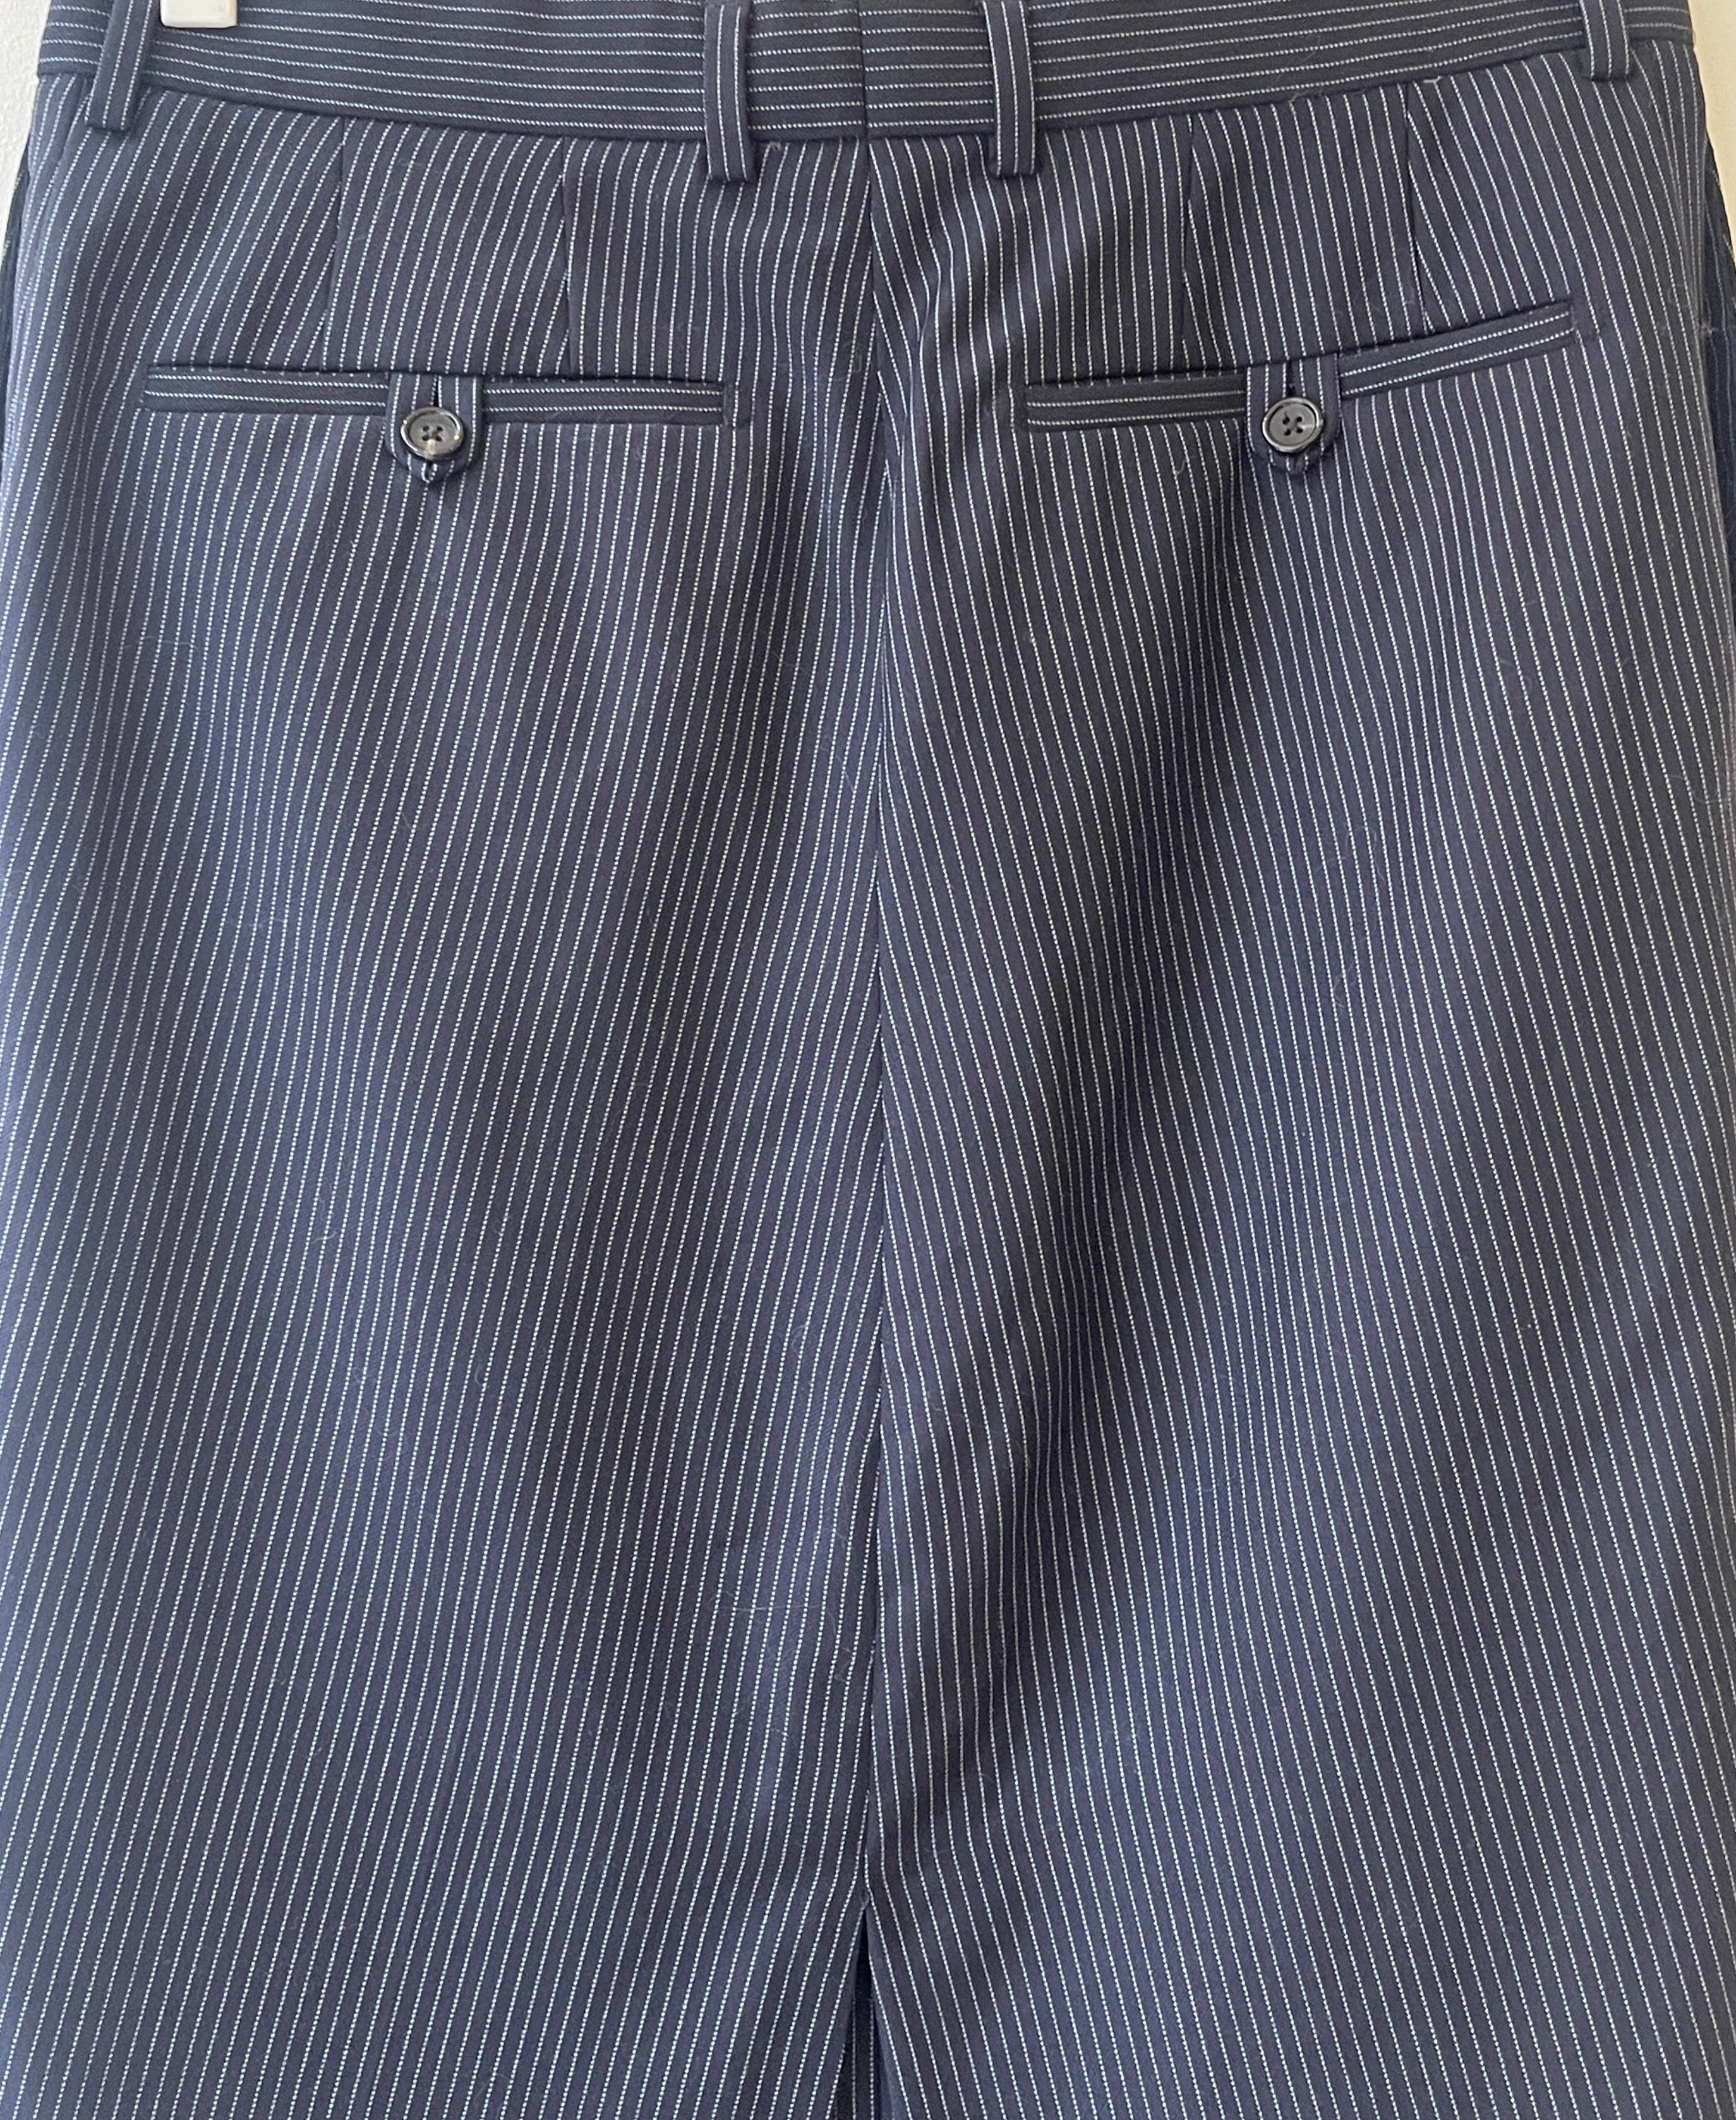 Dark blue long pencil skirt